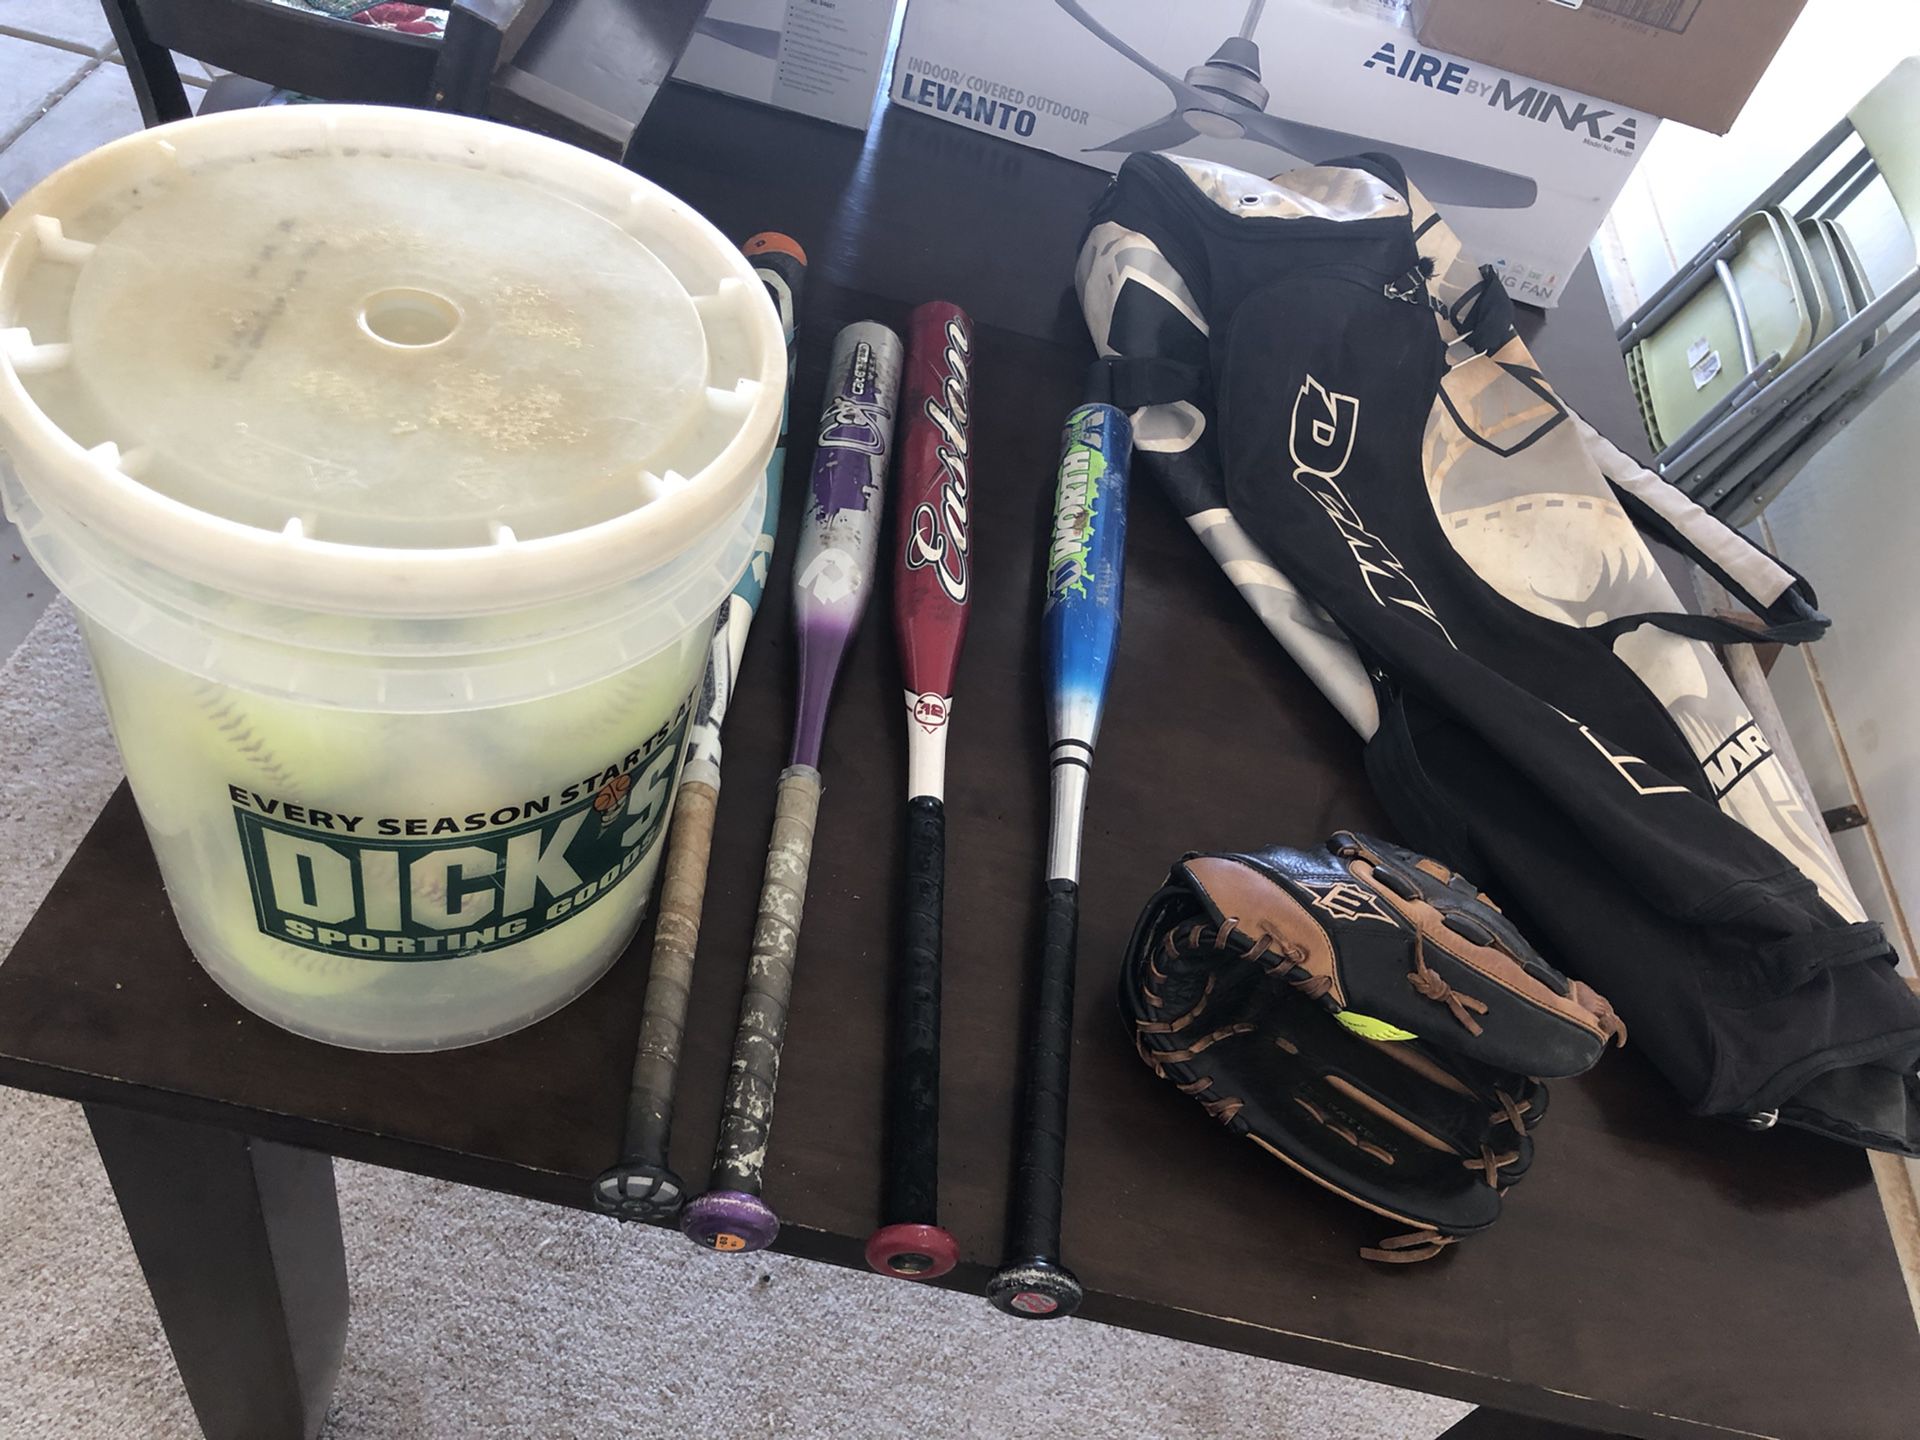 DeMarini Softball Bats / Glove / Bag & Bucket of Softballs